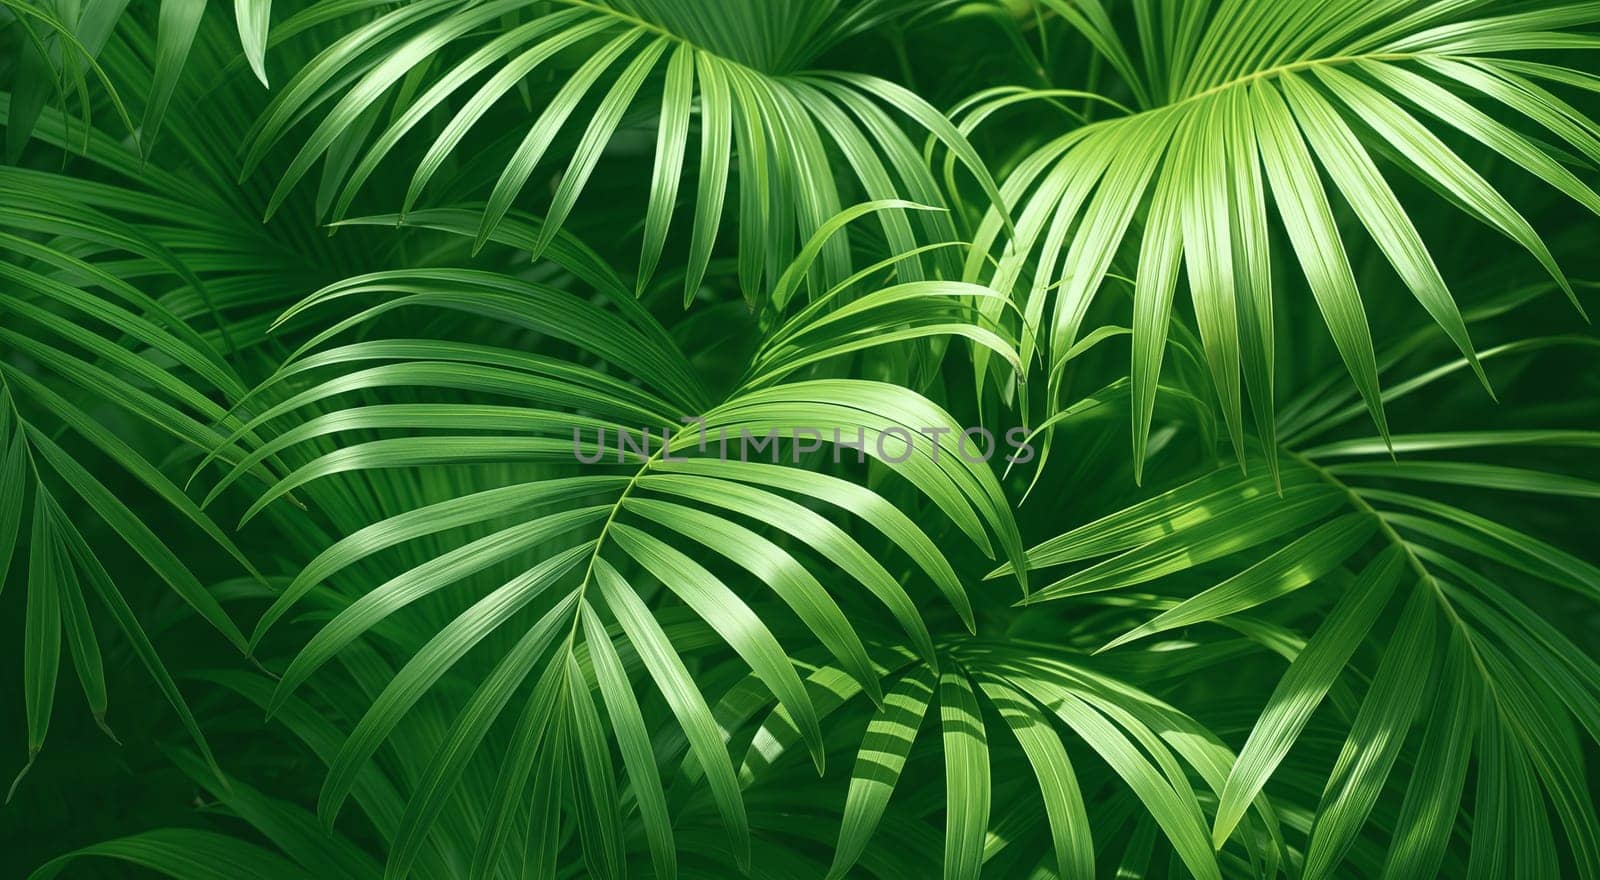 Lush green palm leaves creating a vibrant, tropical texture. by kizuneko